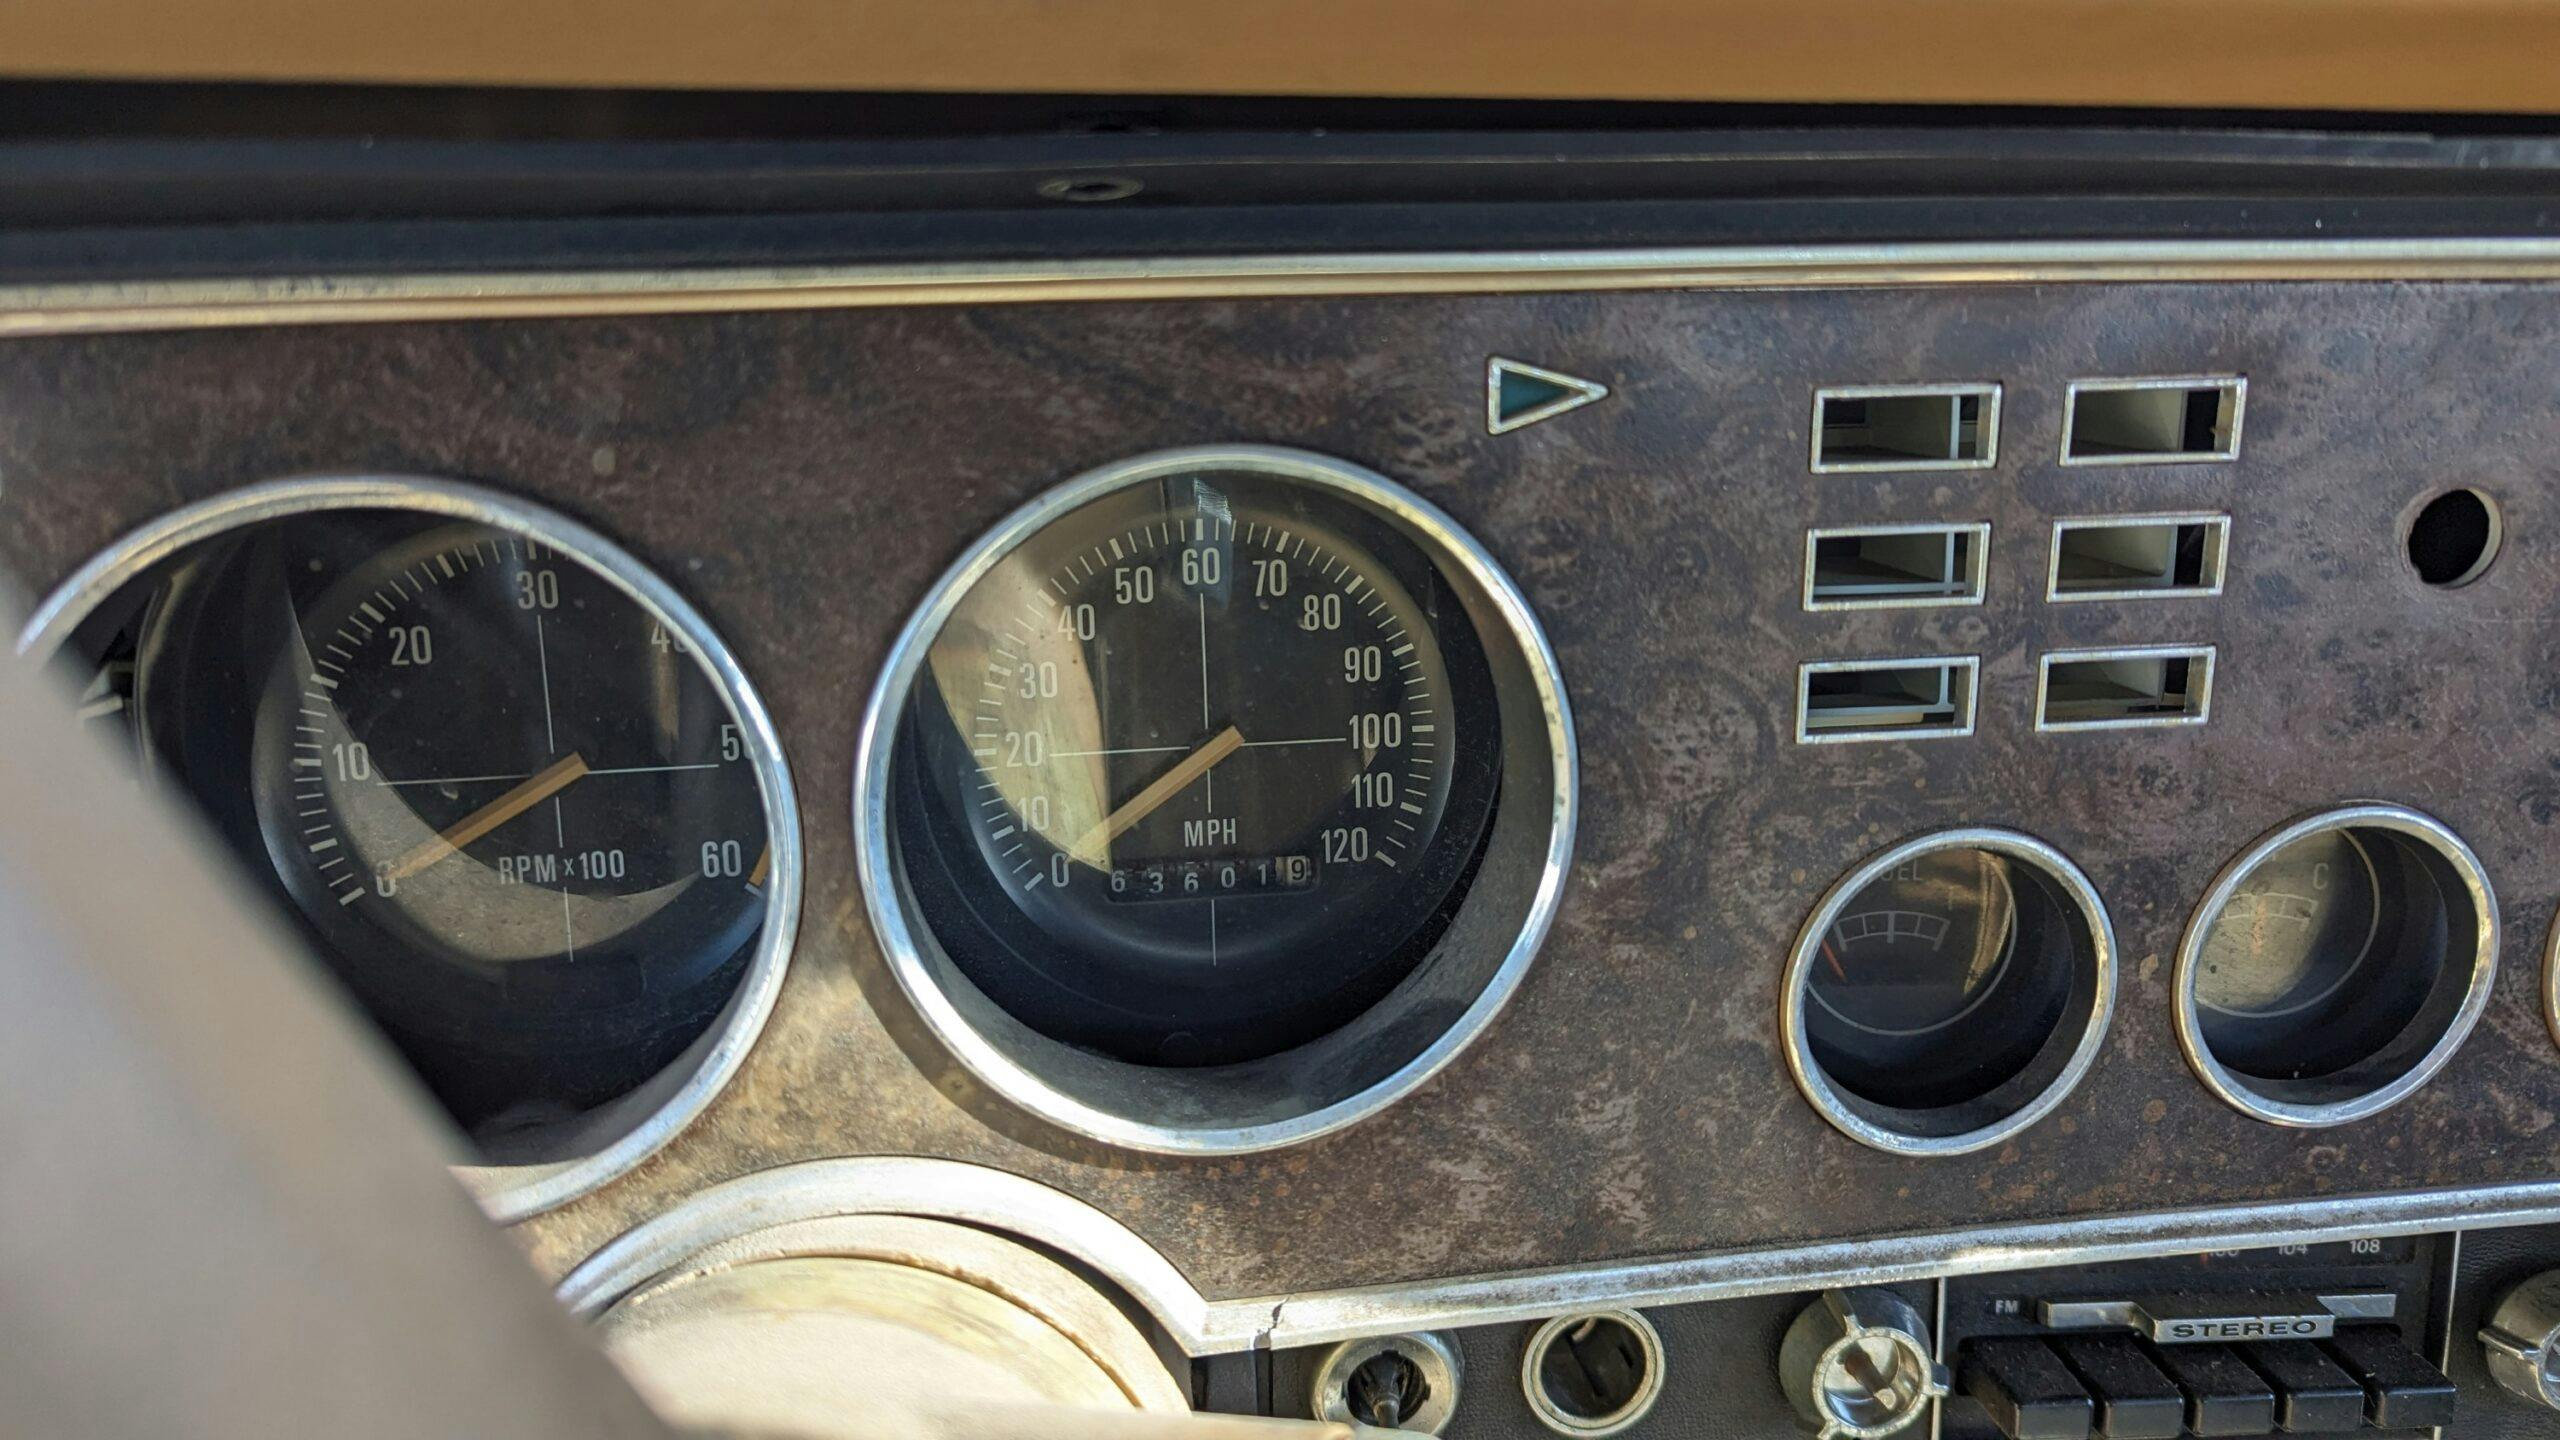 1974 Ford Mustang II Ghia Hardtop dash gauges